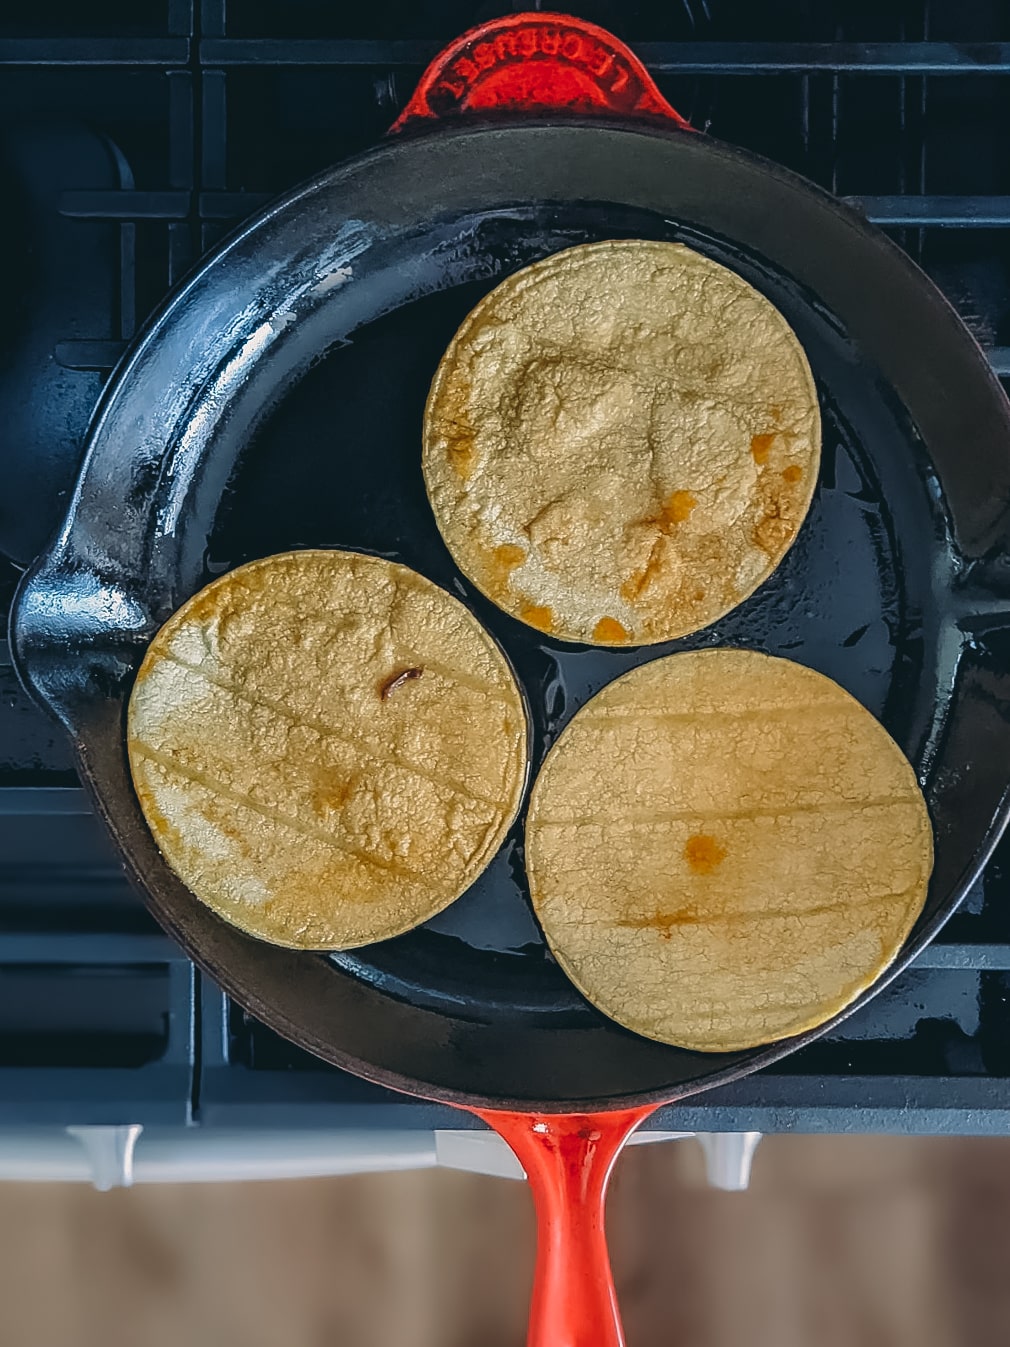 Corn tortillas in a frying pan.